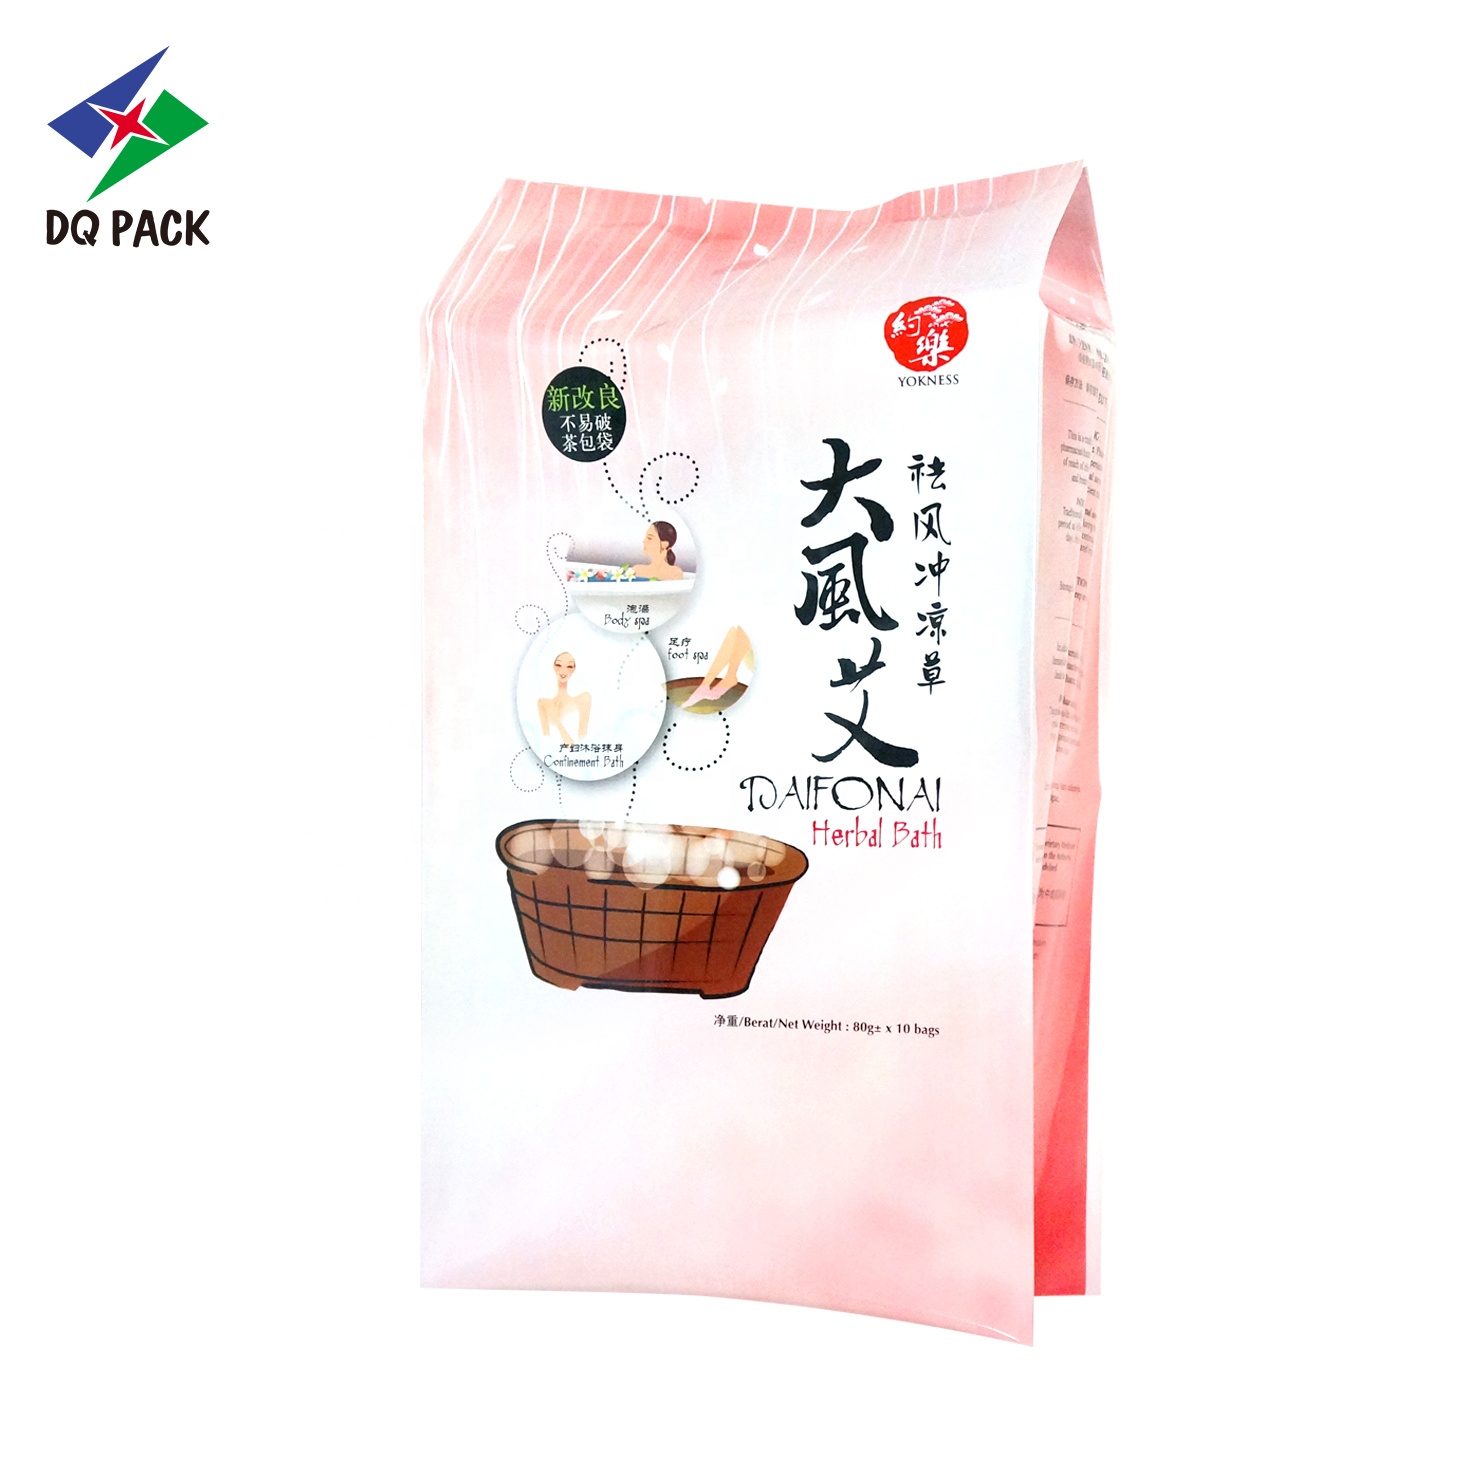 DQ PACK China Guangdong Wholesale  Tea Packaging Bag